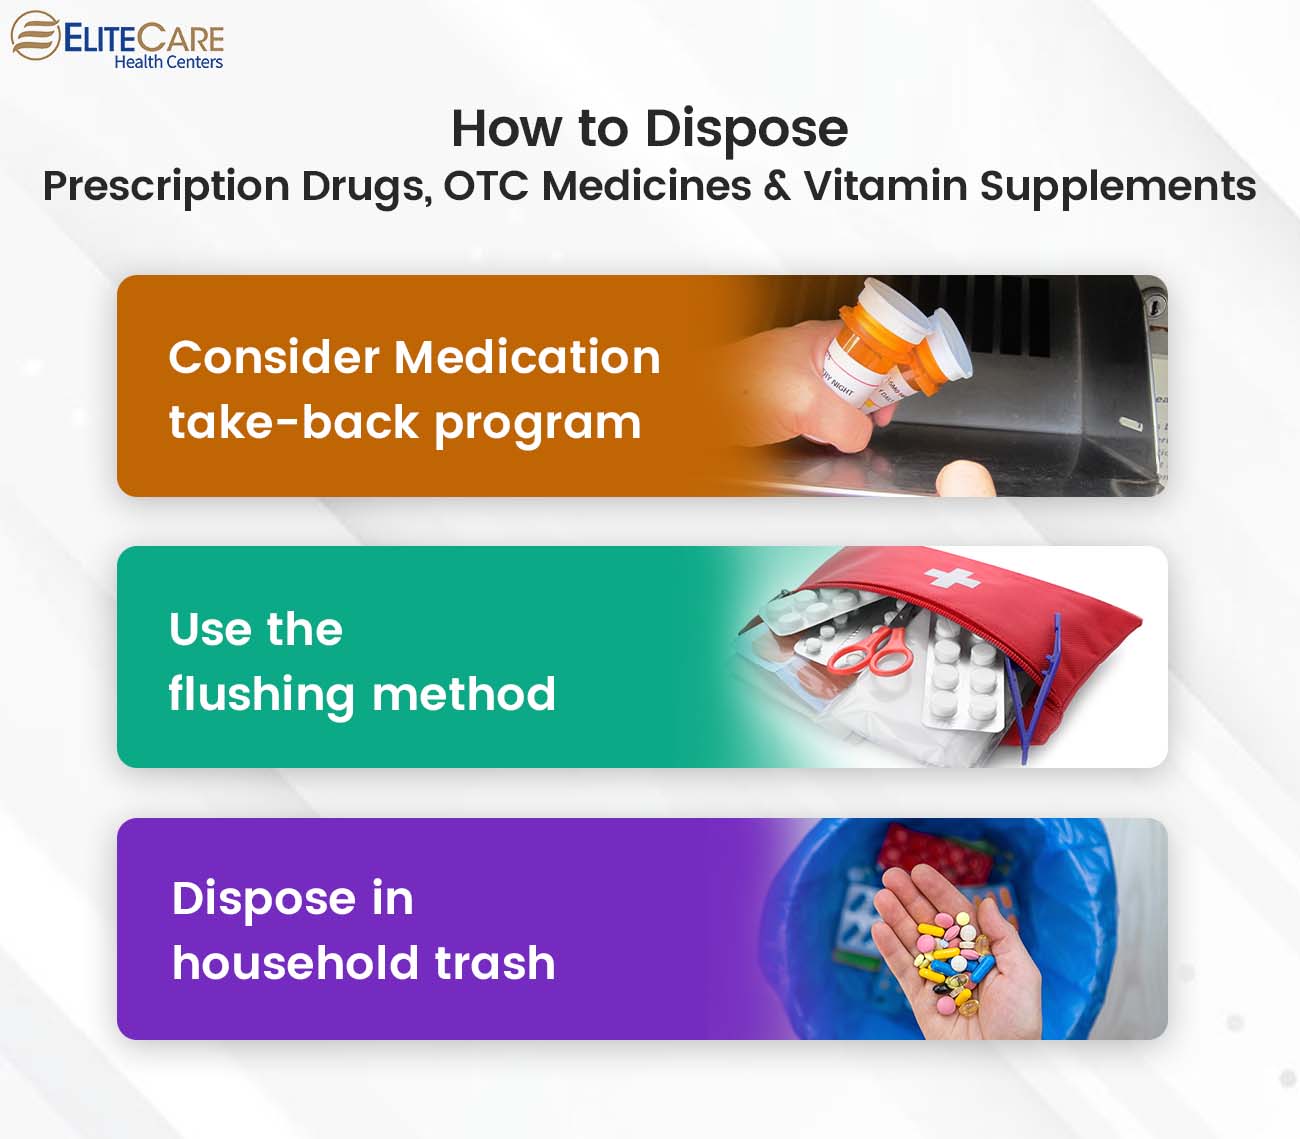 How to Dispose Prescription Drugs, OTC Medicines & Vitamin Supplements